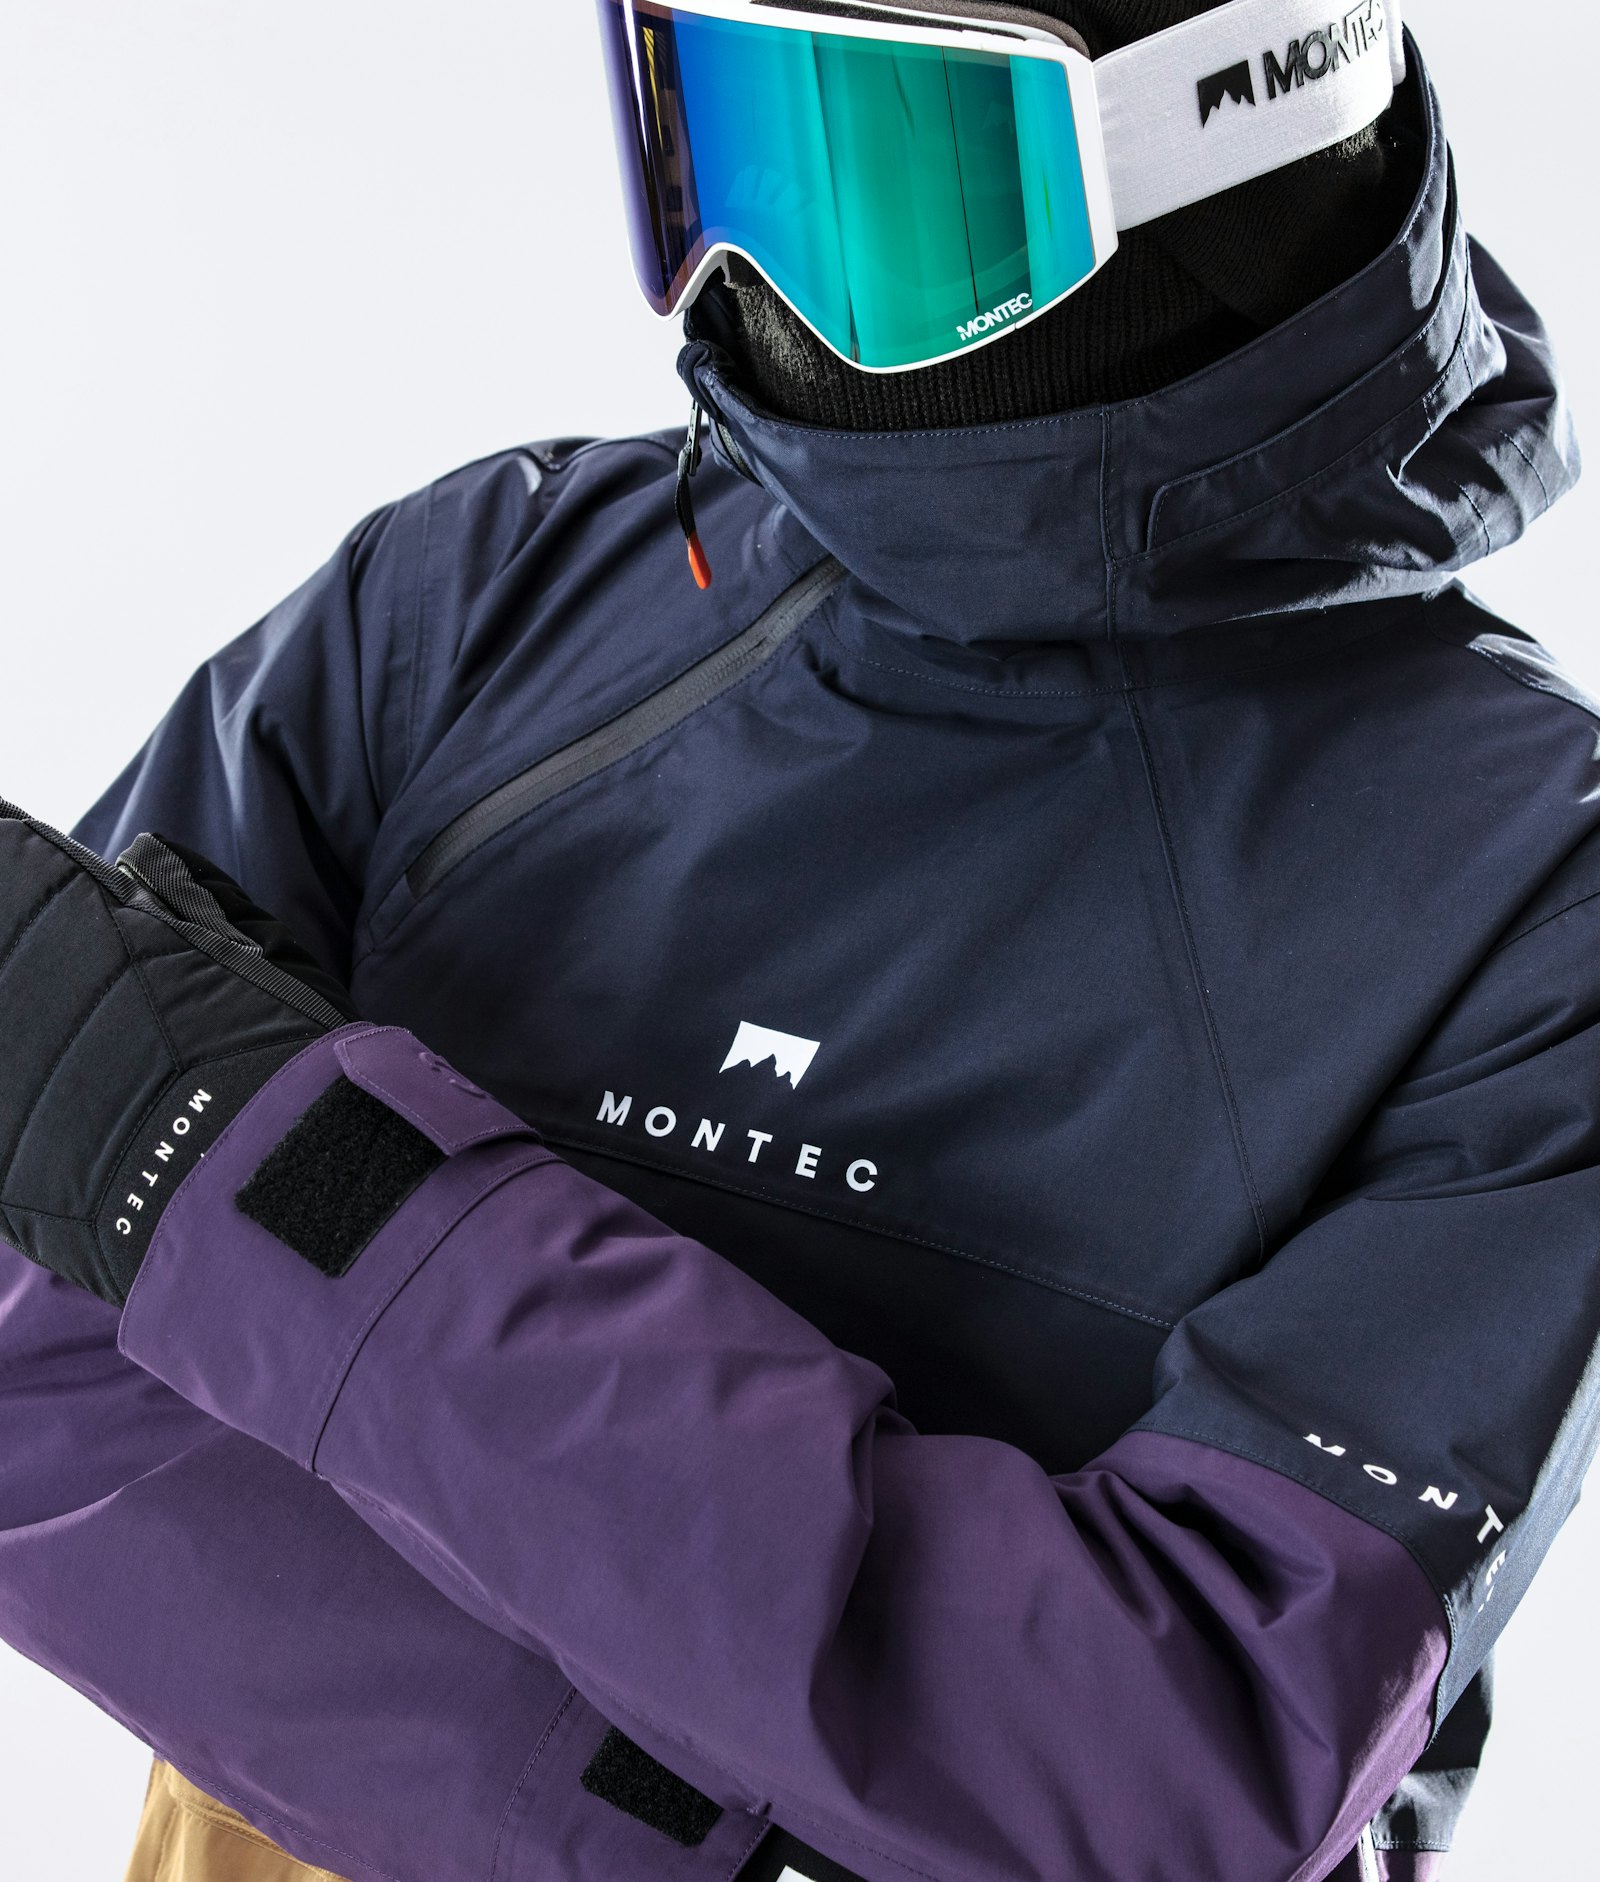 Dune 2020 Snowboard jas Heren Marine/Gold/Purple